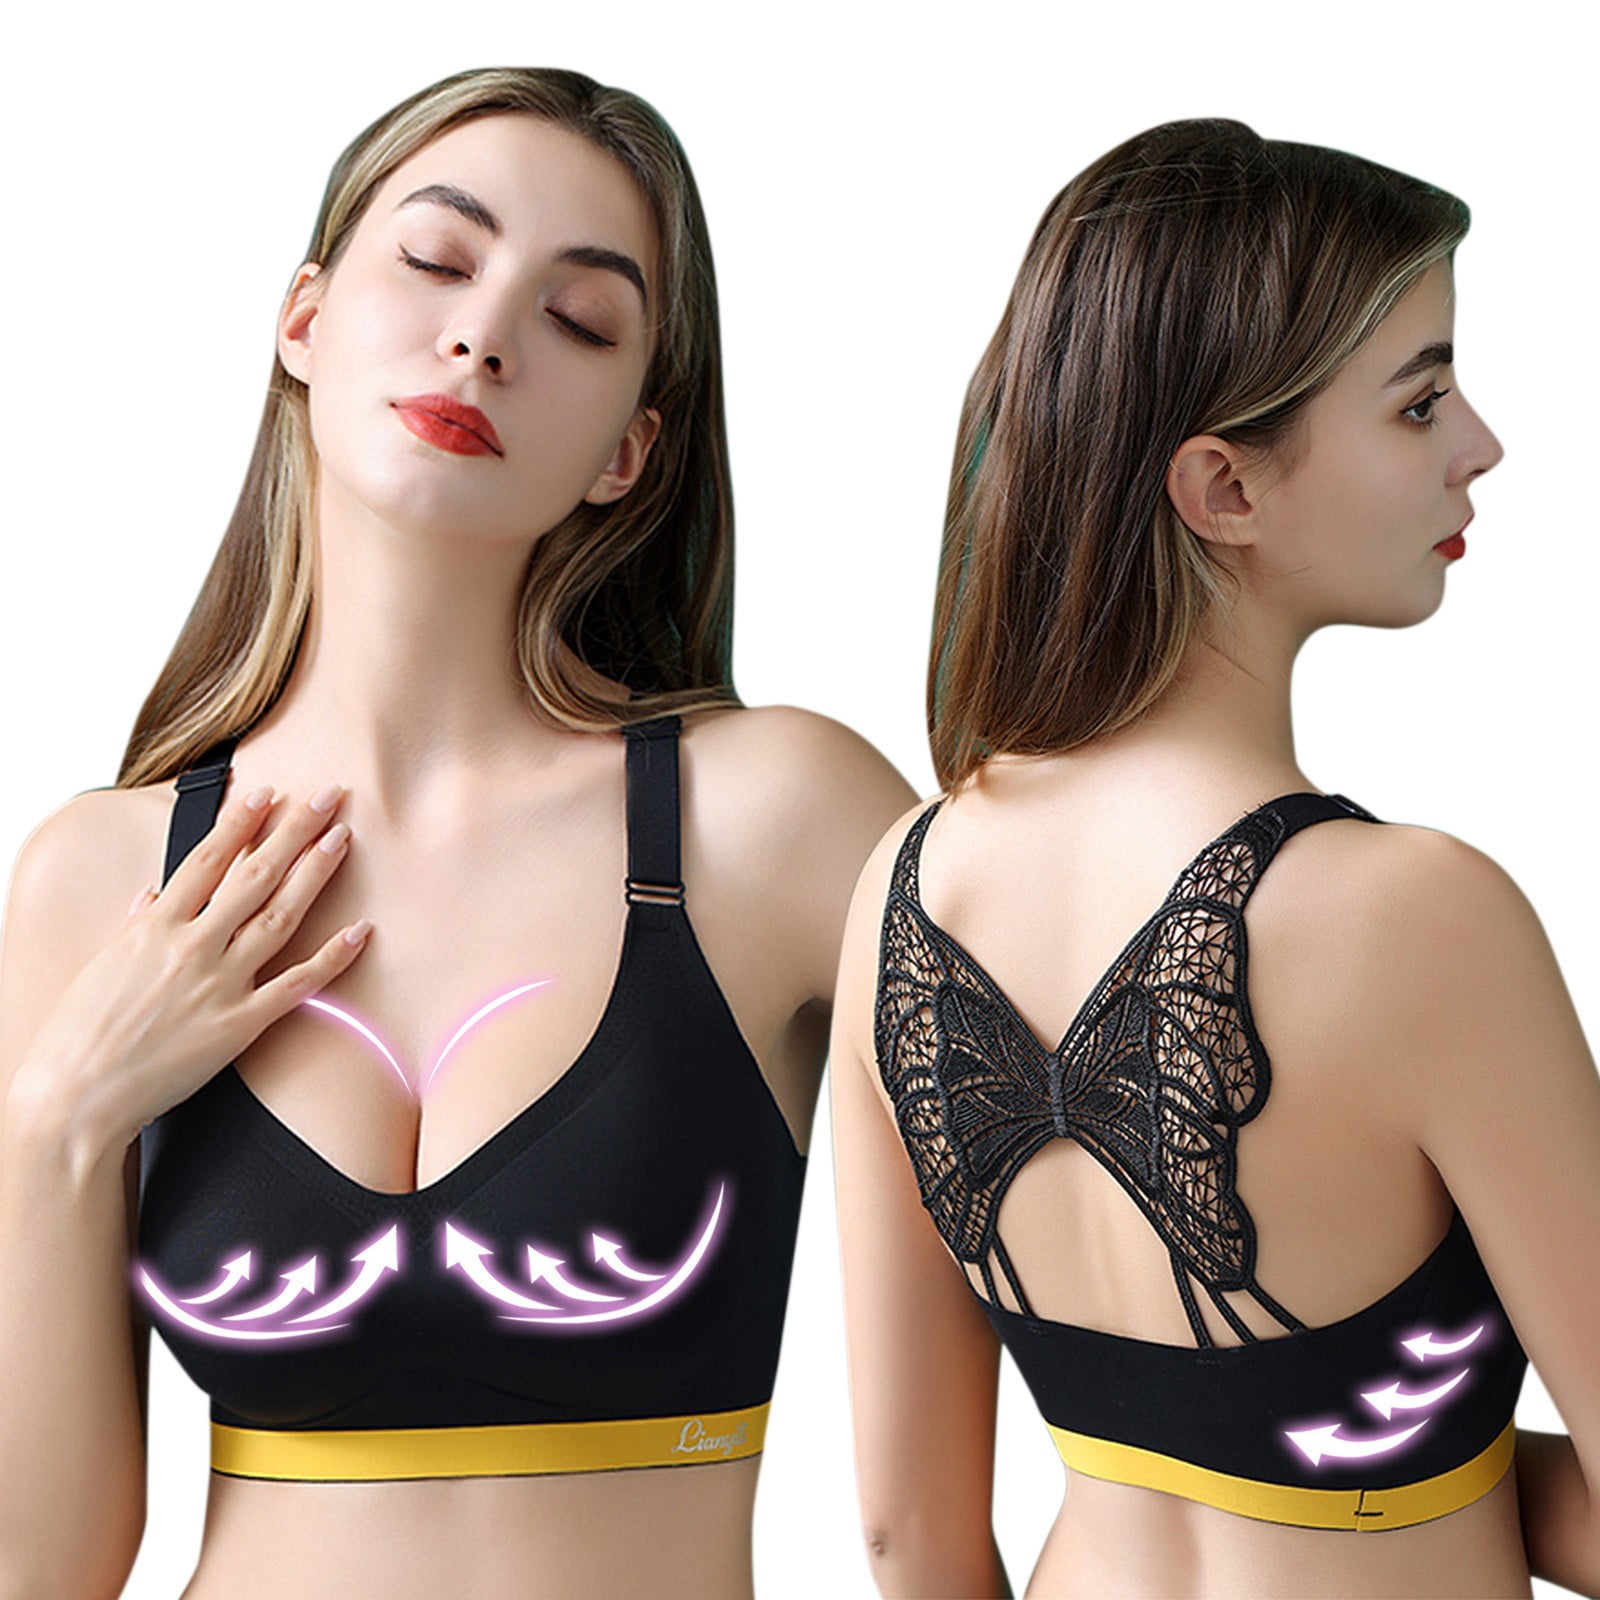 Frehsky bras for women Big Girls Student Training Bras Wireless